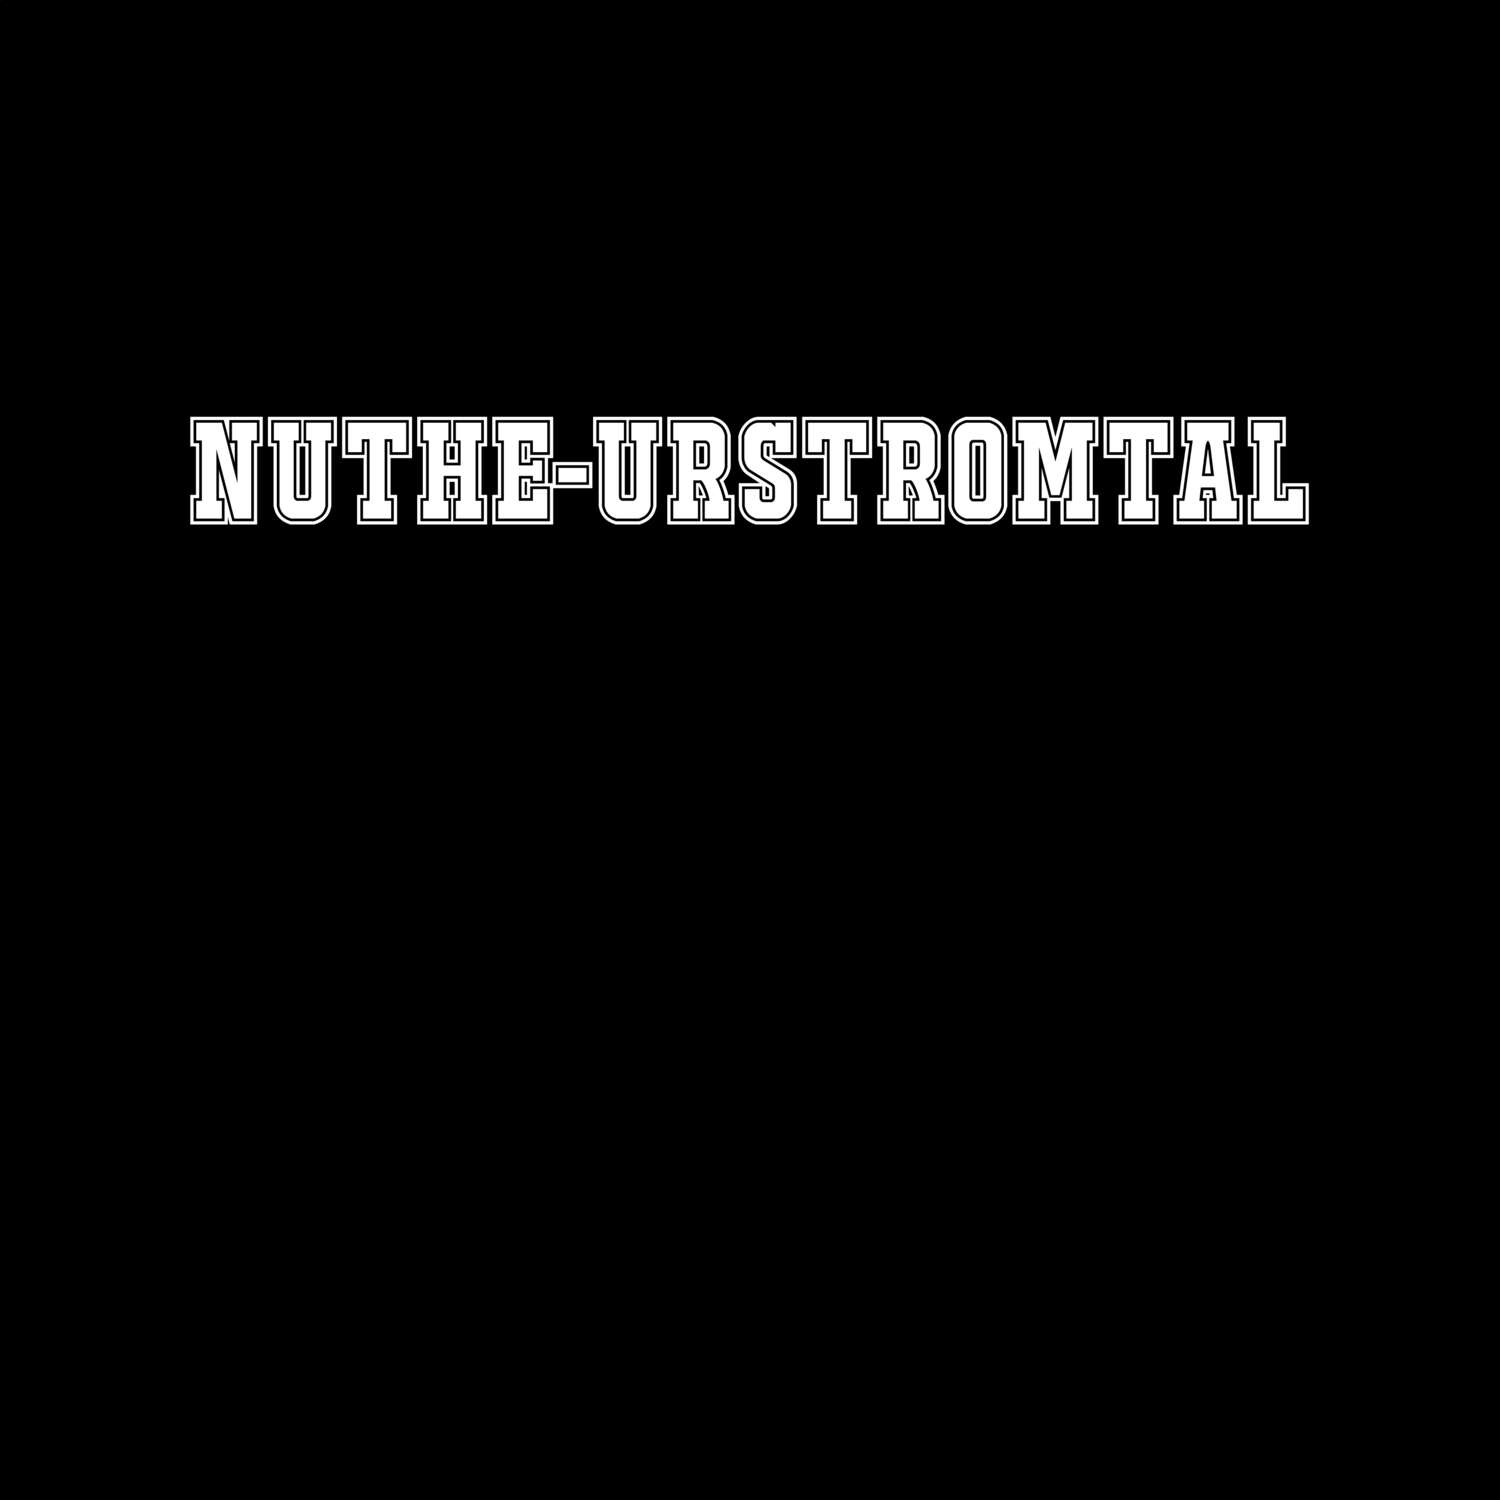 Nuthe-Urstromtal T-Shirt »Classic«